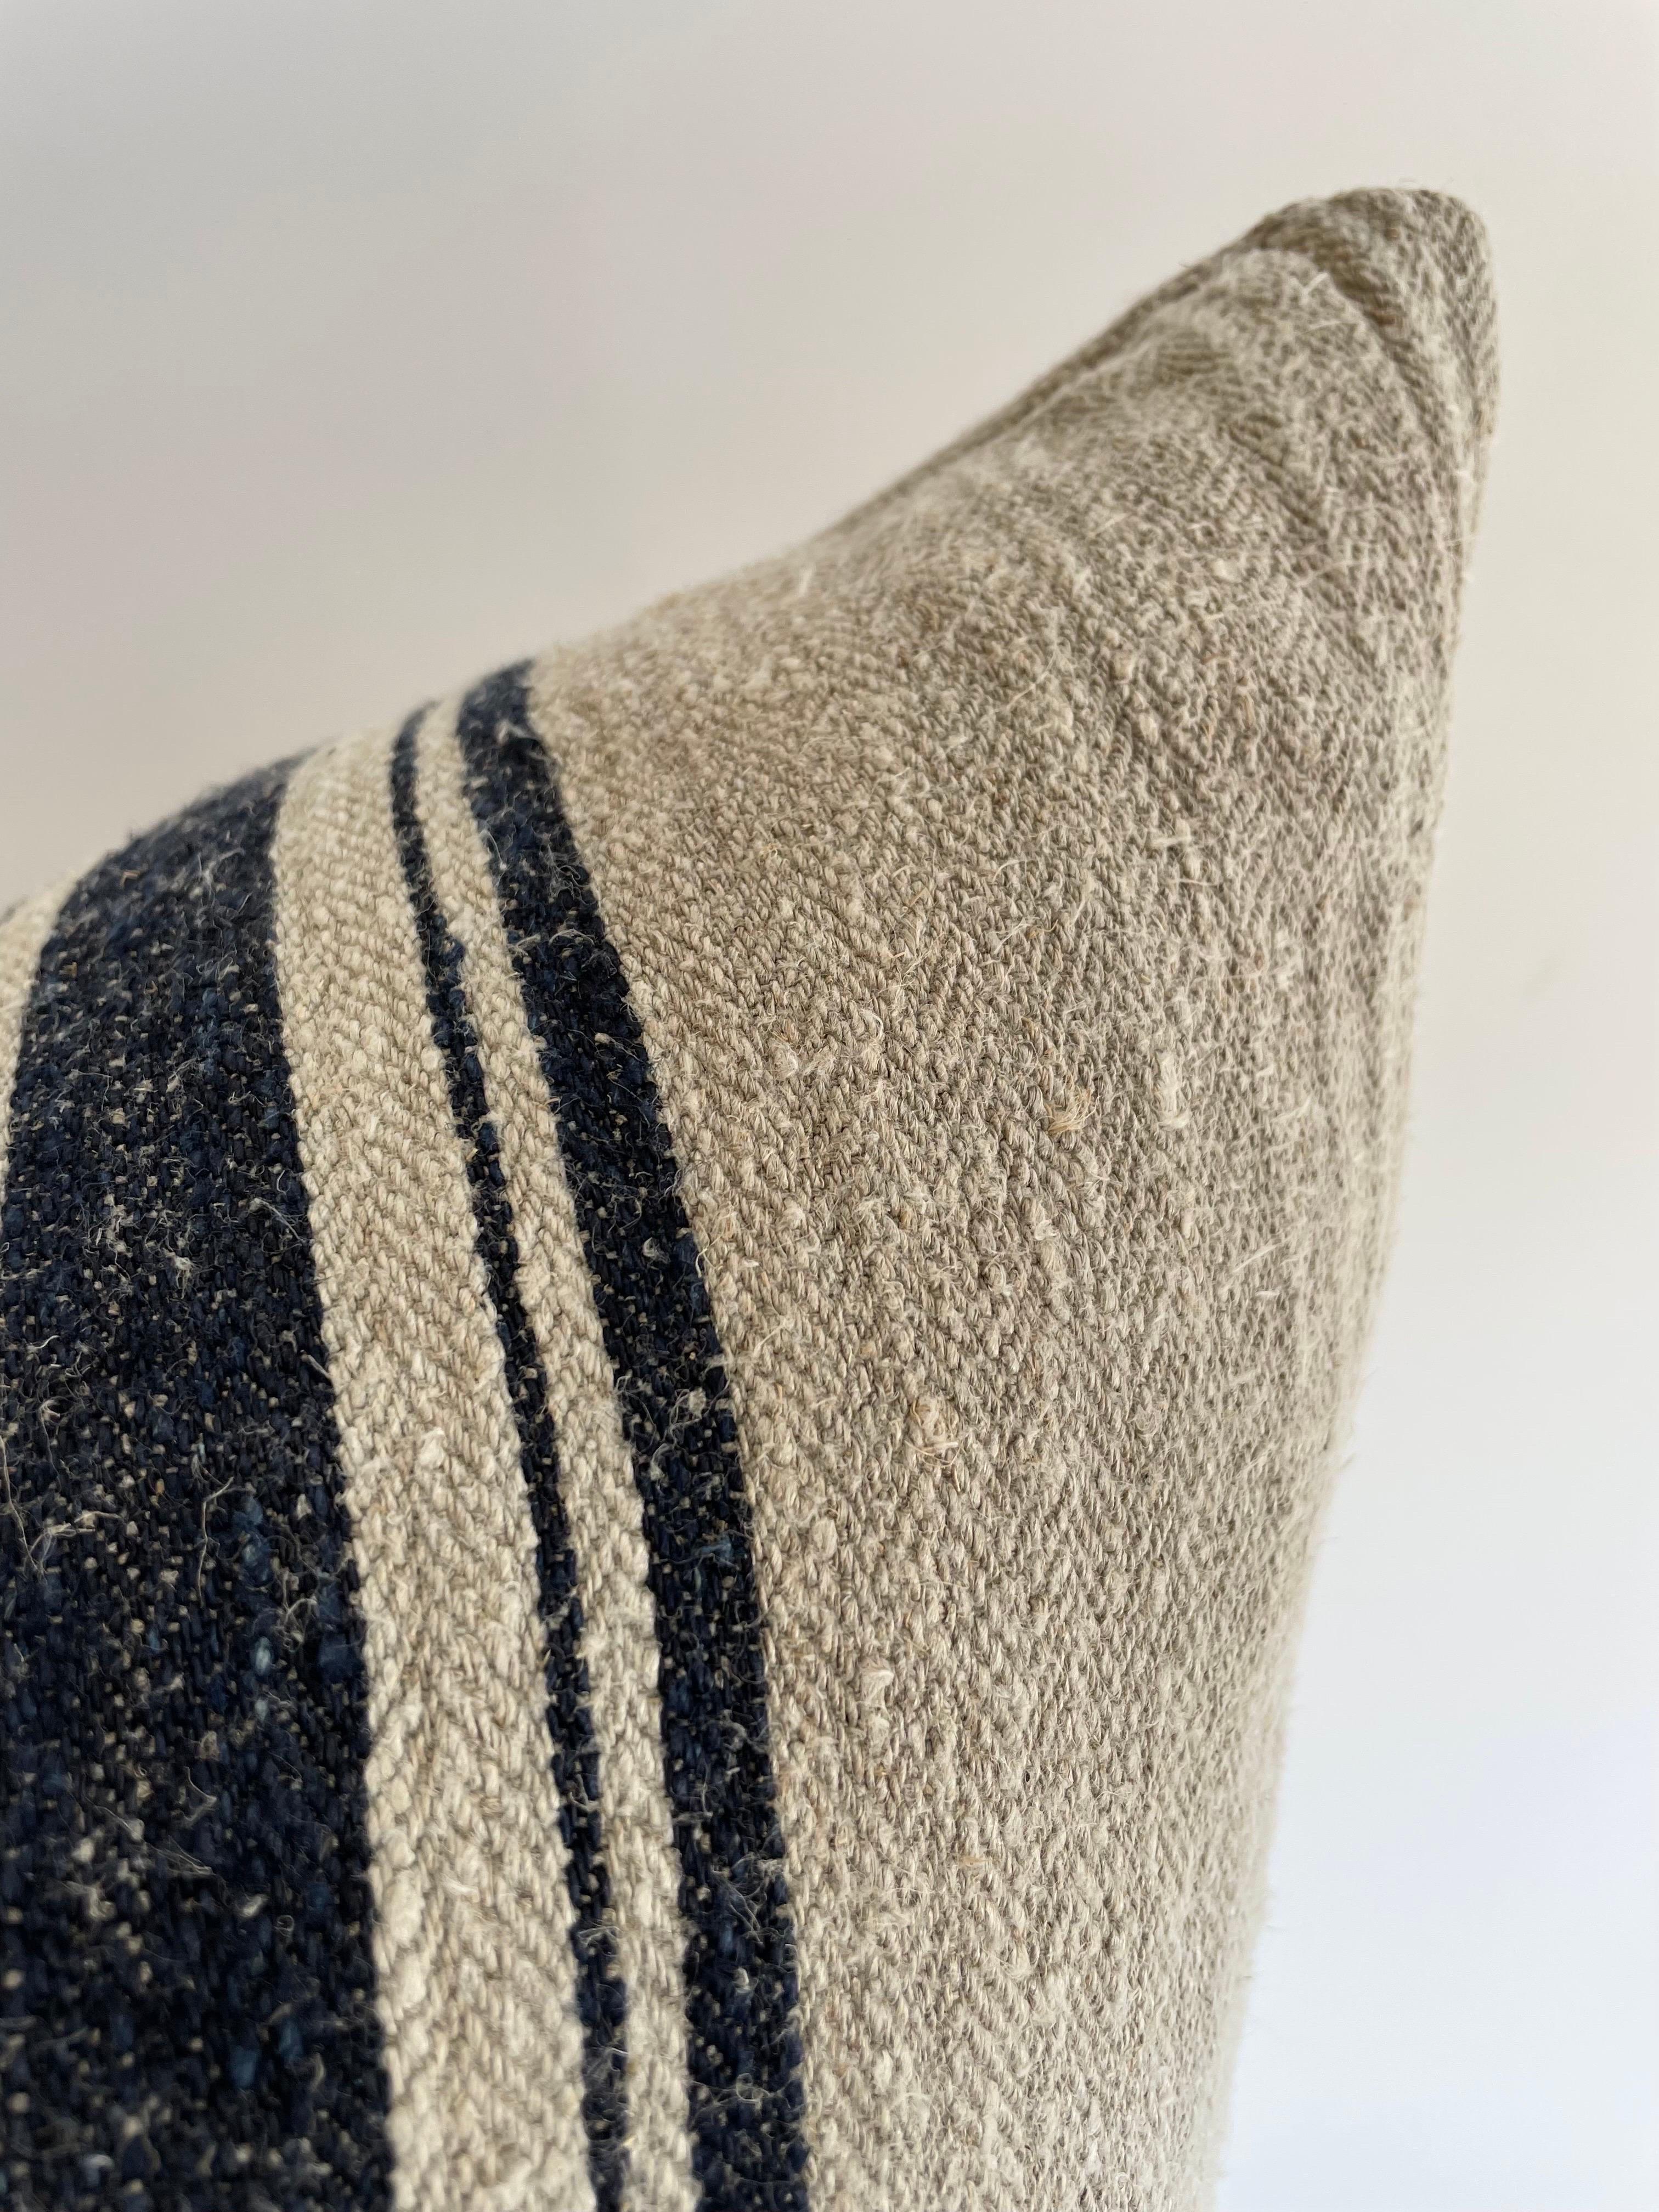 19th Century Vintage European Linen Grain Sack Pillow with Insert